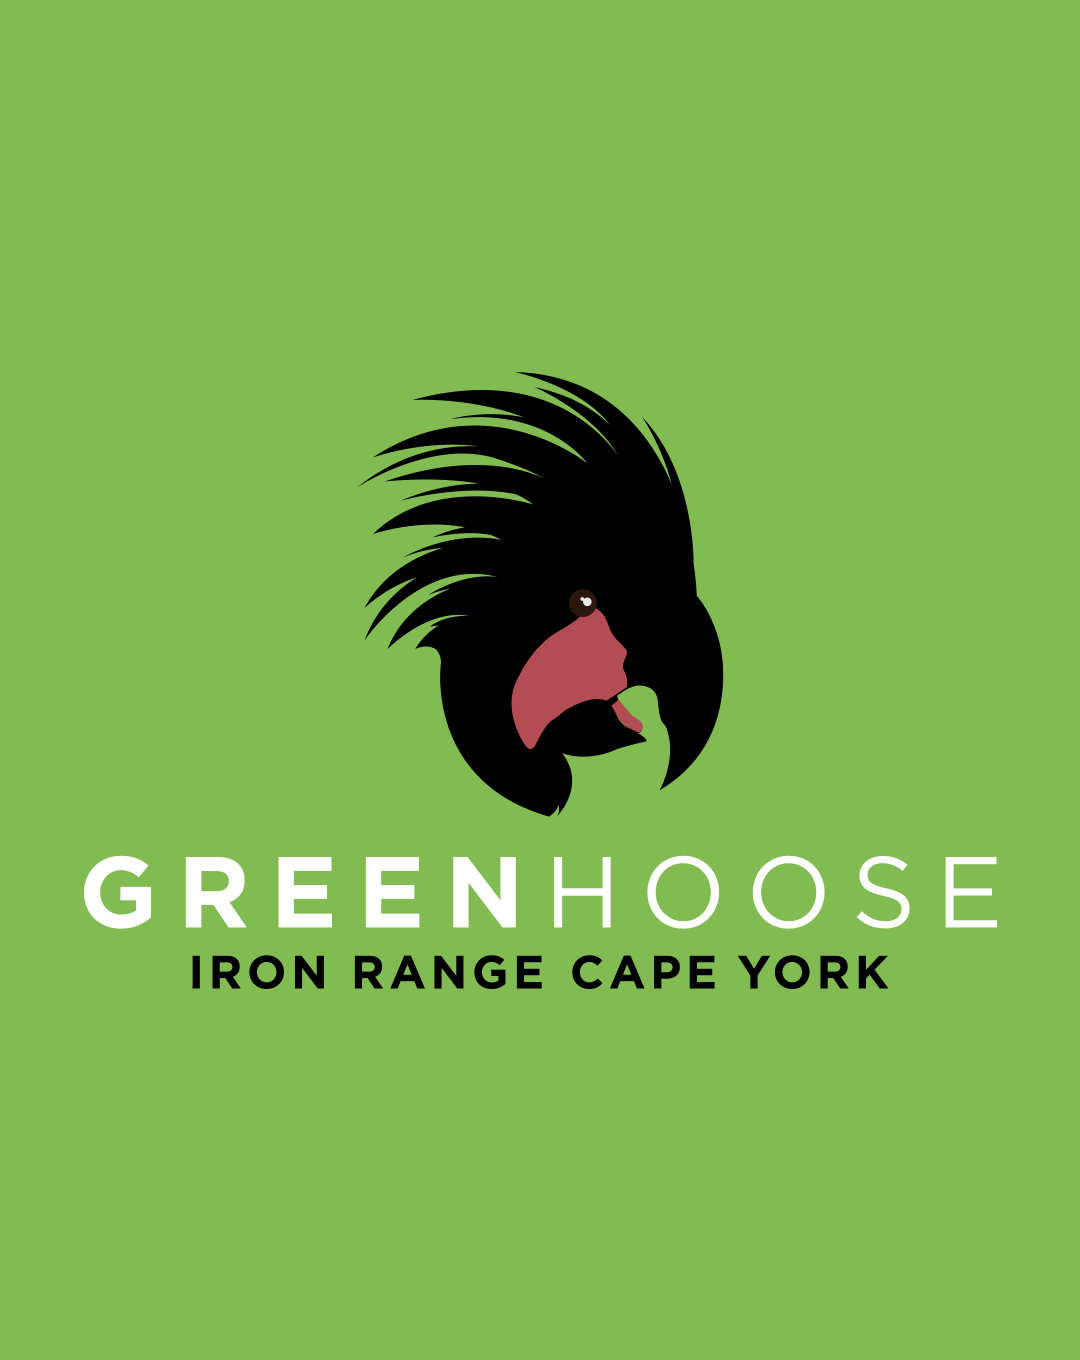 Greenhoose accommodation at Lockhart River Cape York logo